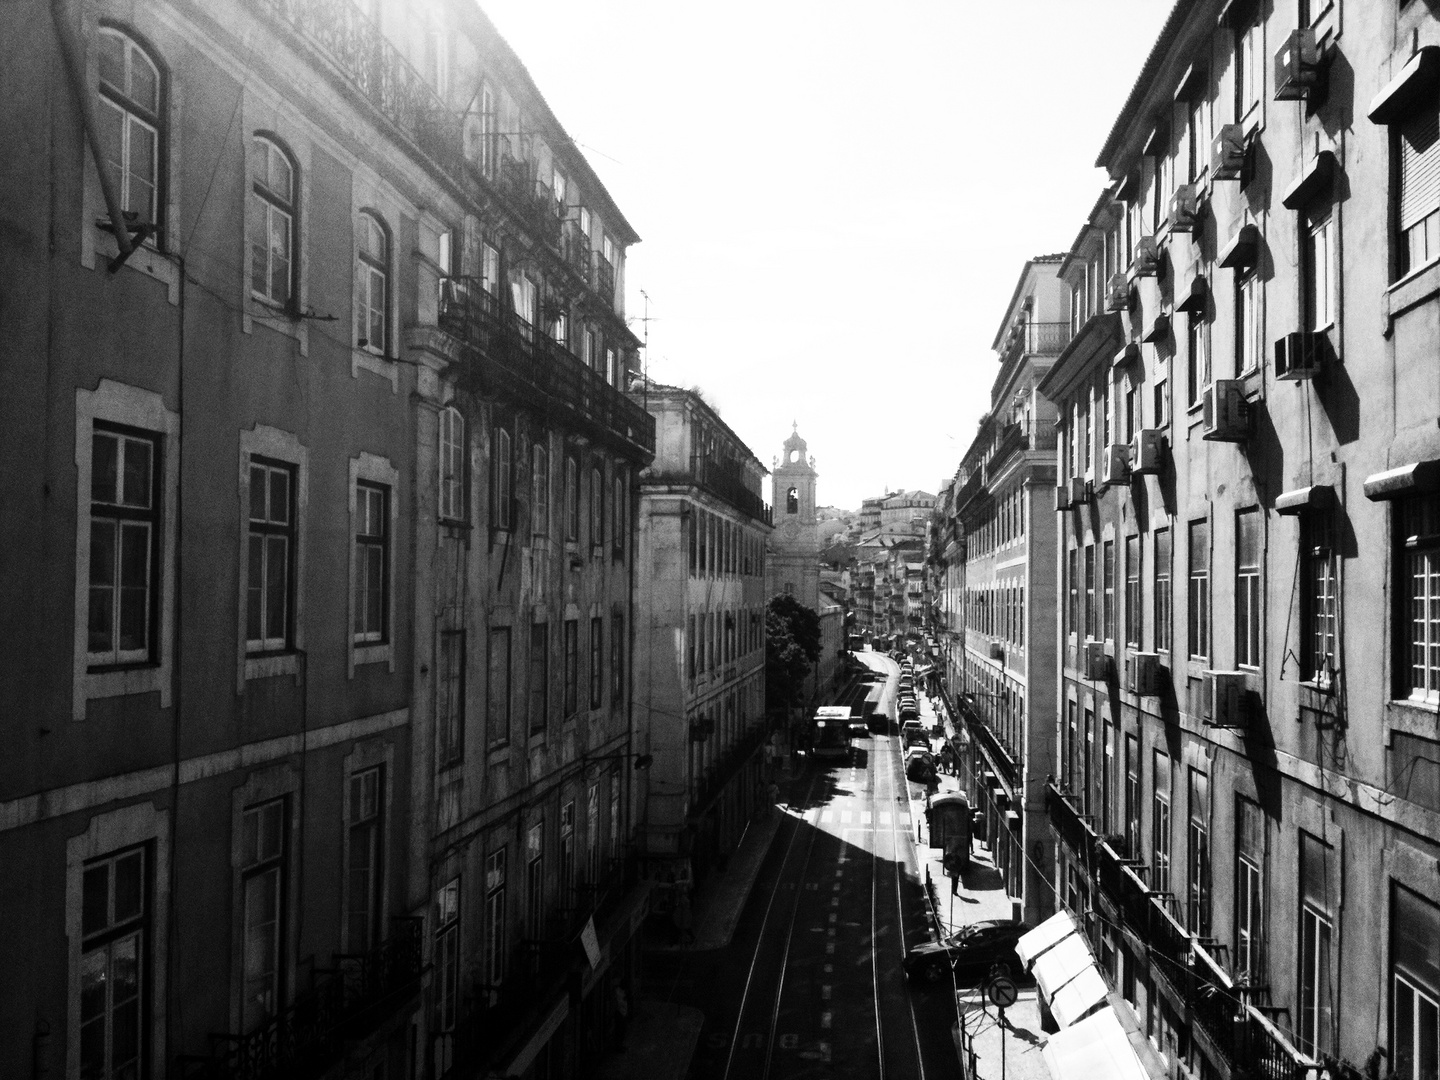 Streets of Lissabon